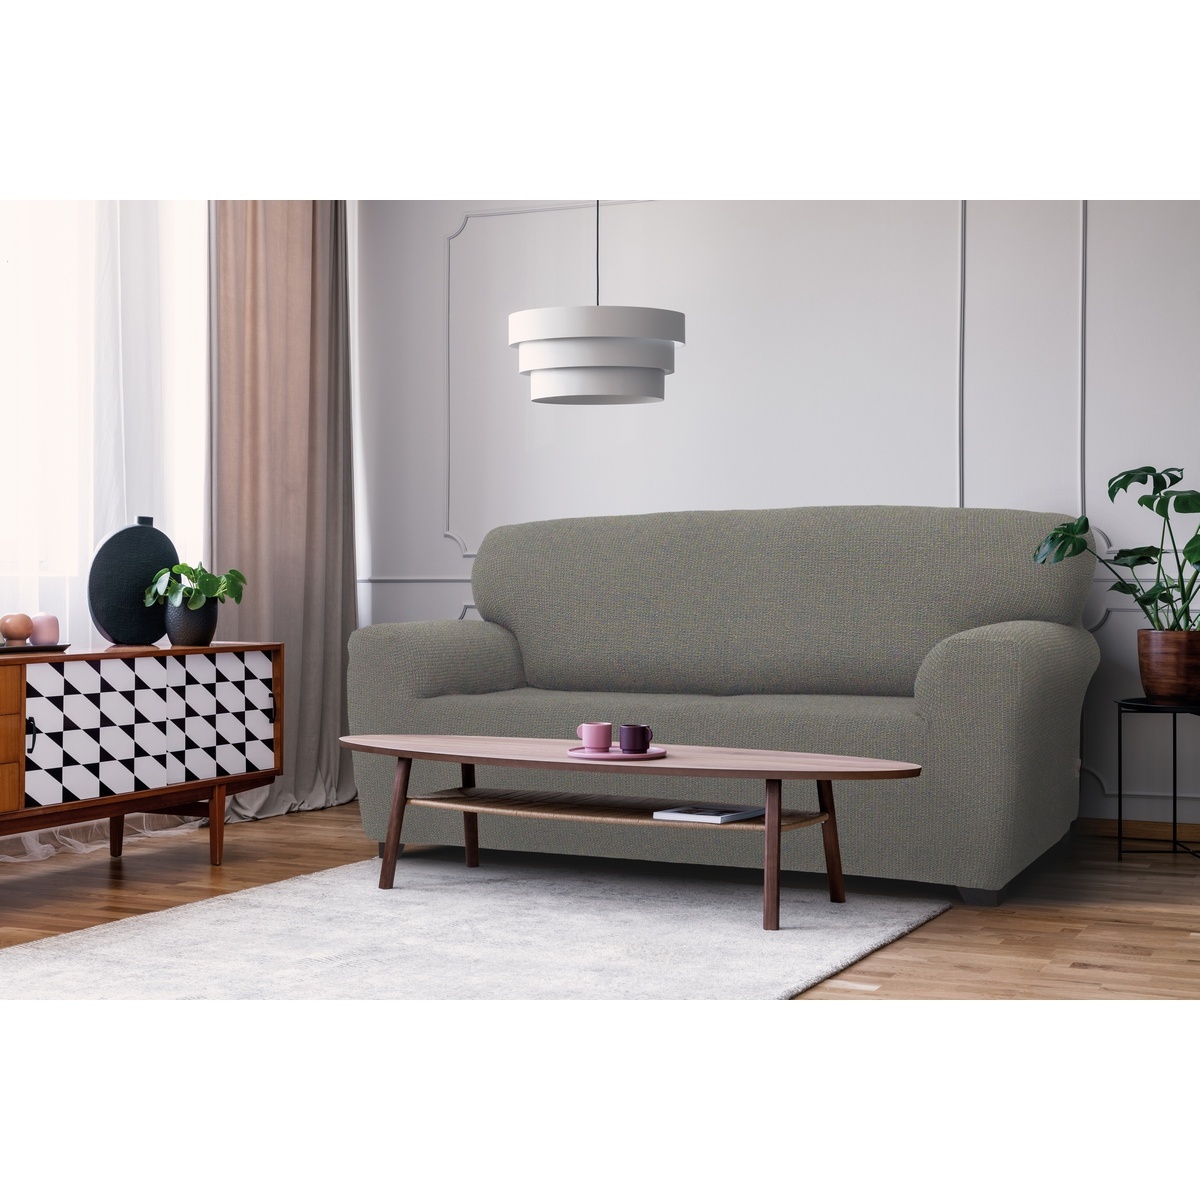 Denia multielasztikus kanapéhuzat világosszürke, 140 - 180 cm, 140 - 180 cm